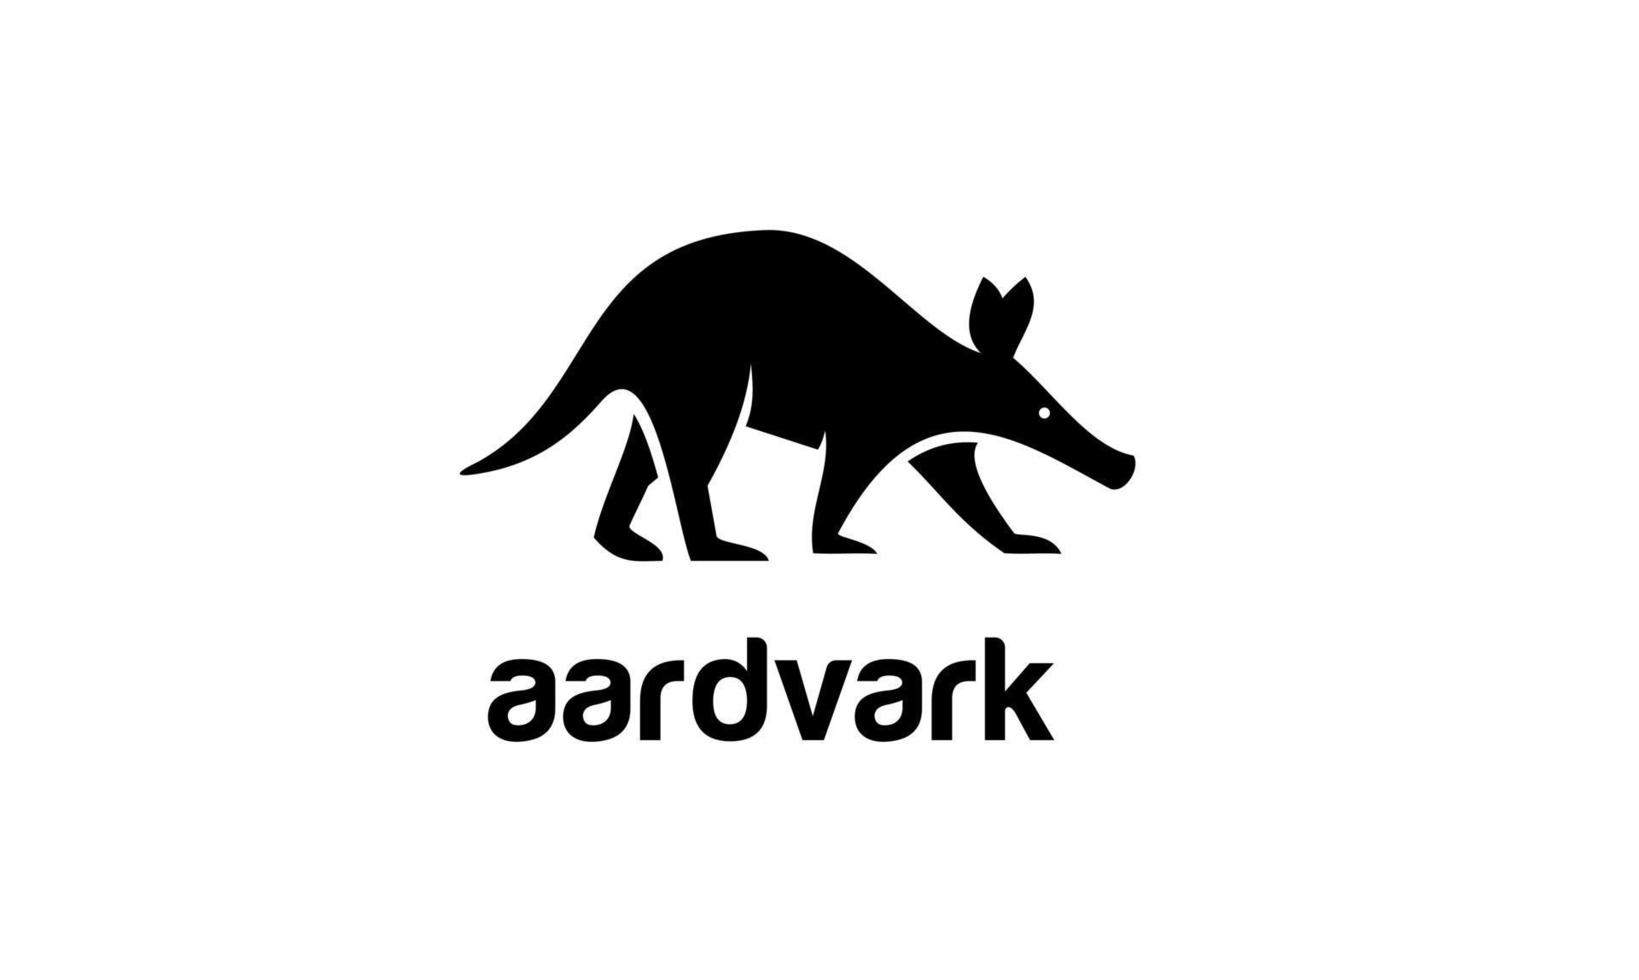 design del logo vettoriale nero aardvark minimal